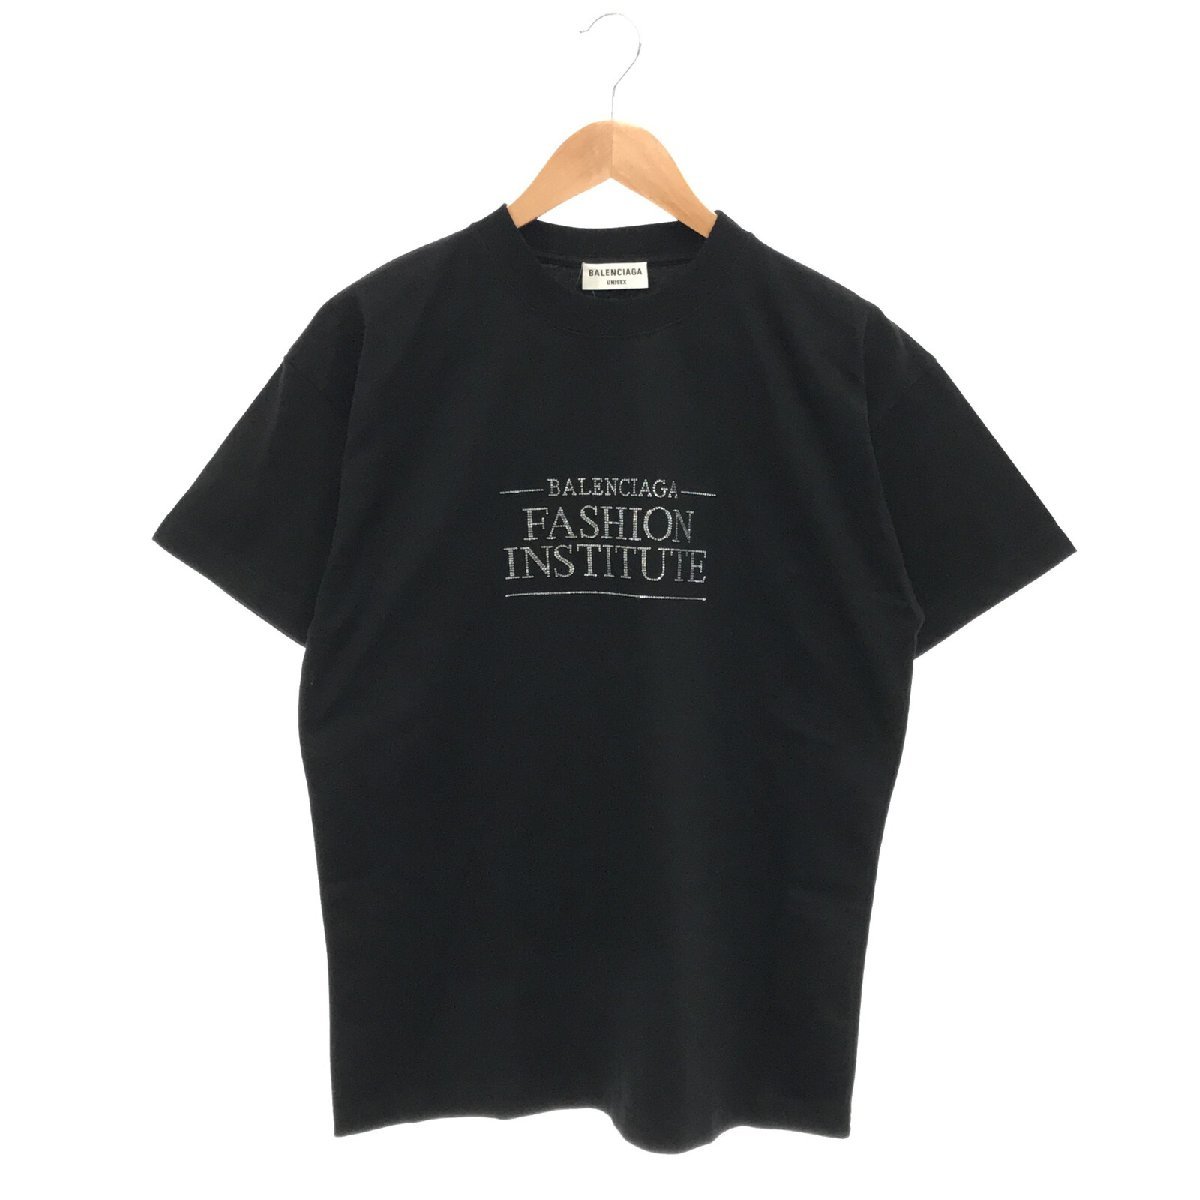 BALENCIAGA バレンシアガ 半袖Tシャツ Tシャツ ブラック系 コットン 中古 ユニセックス